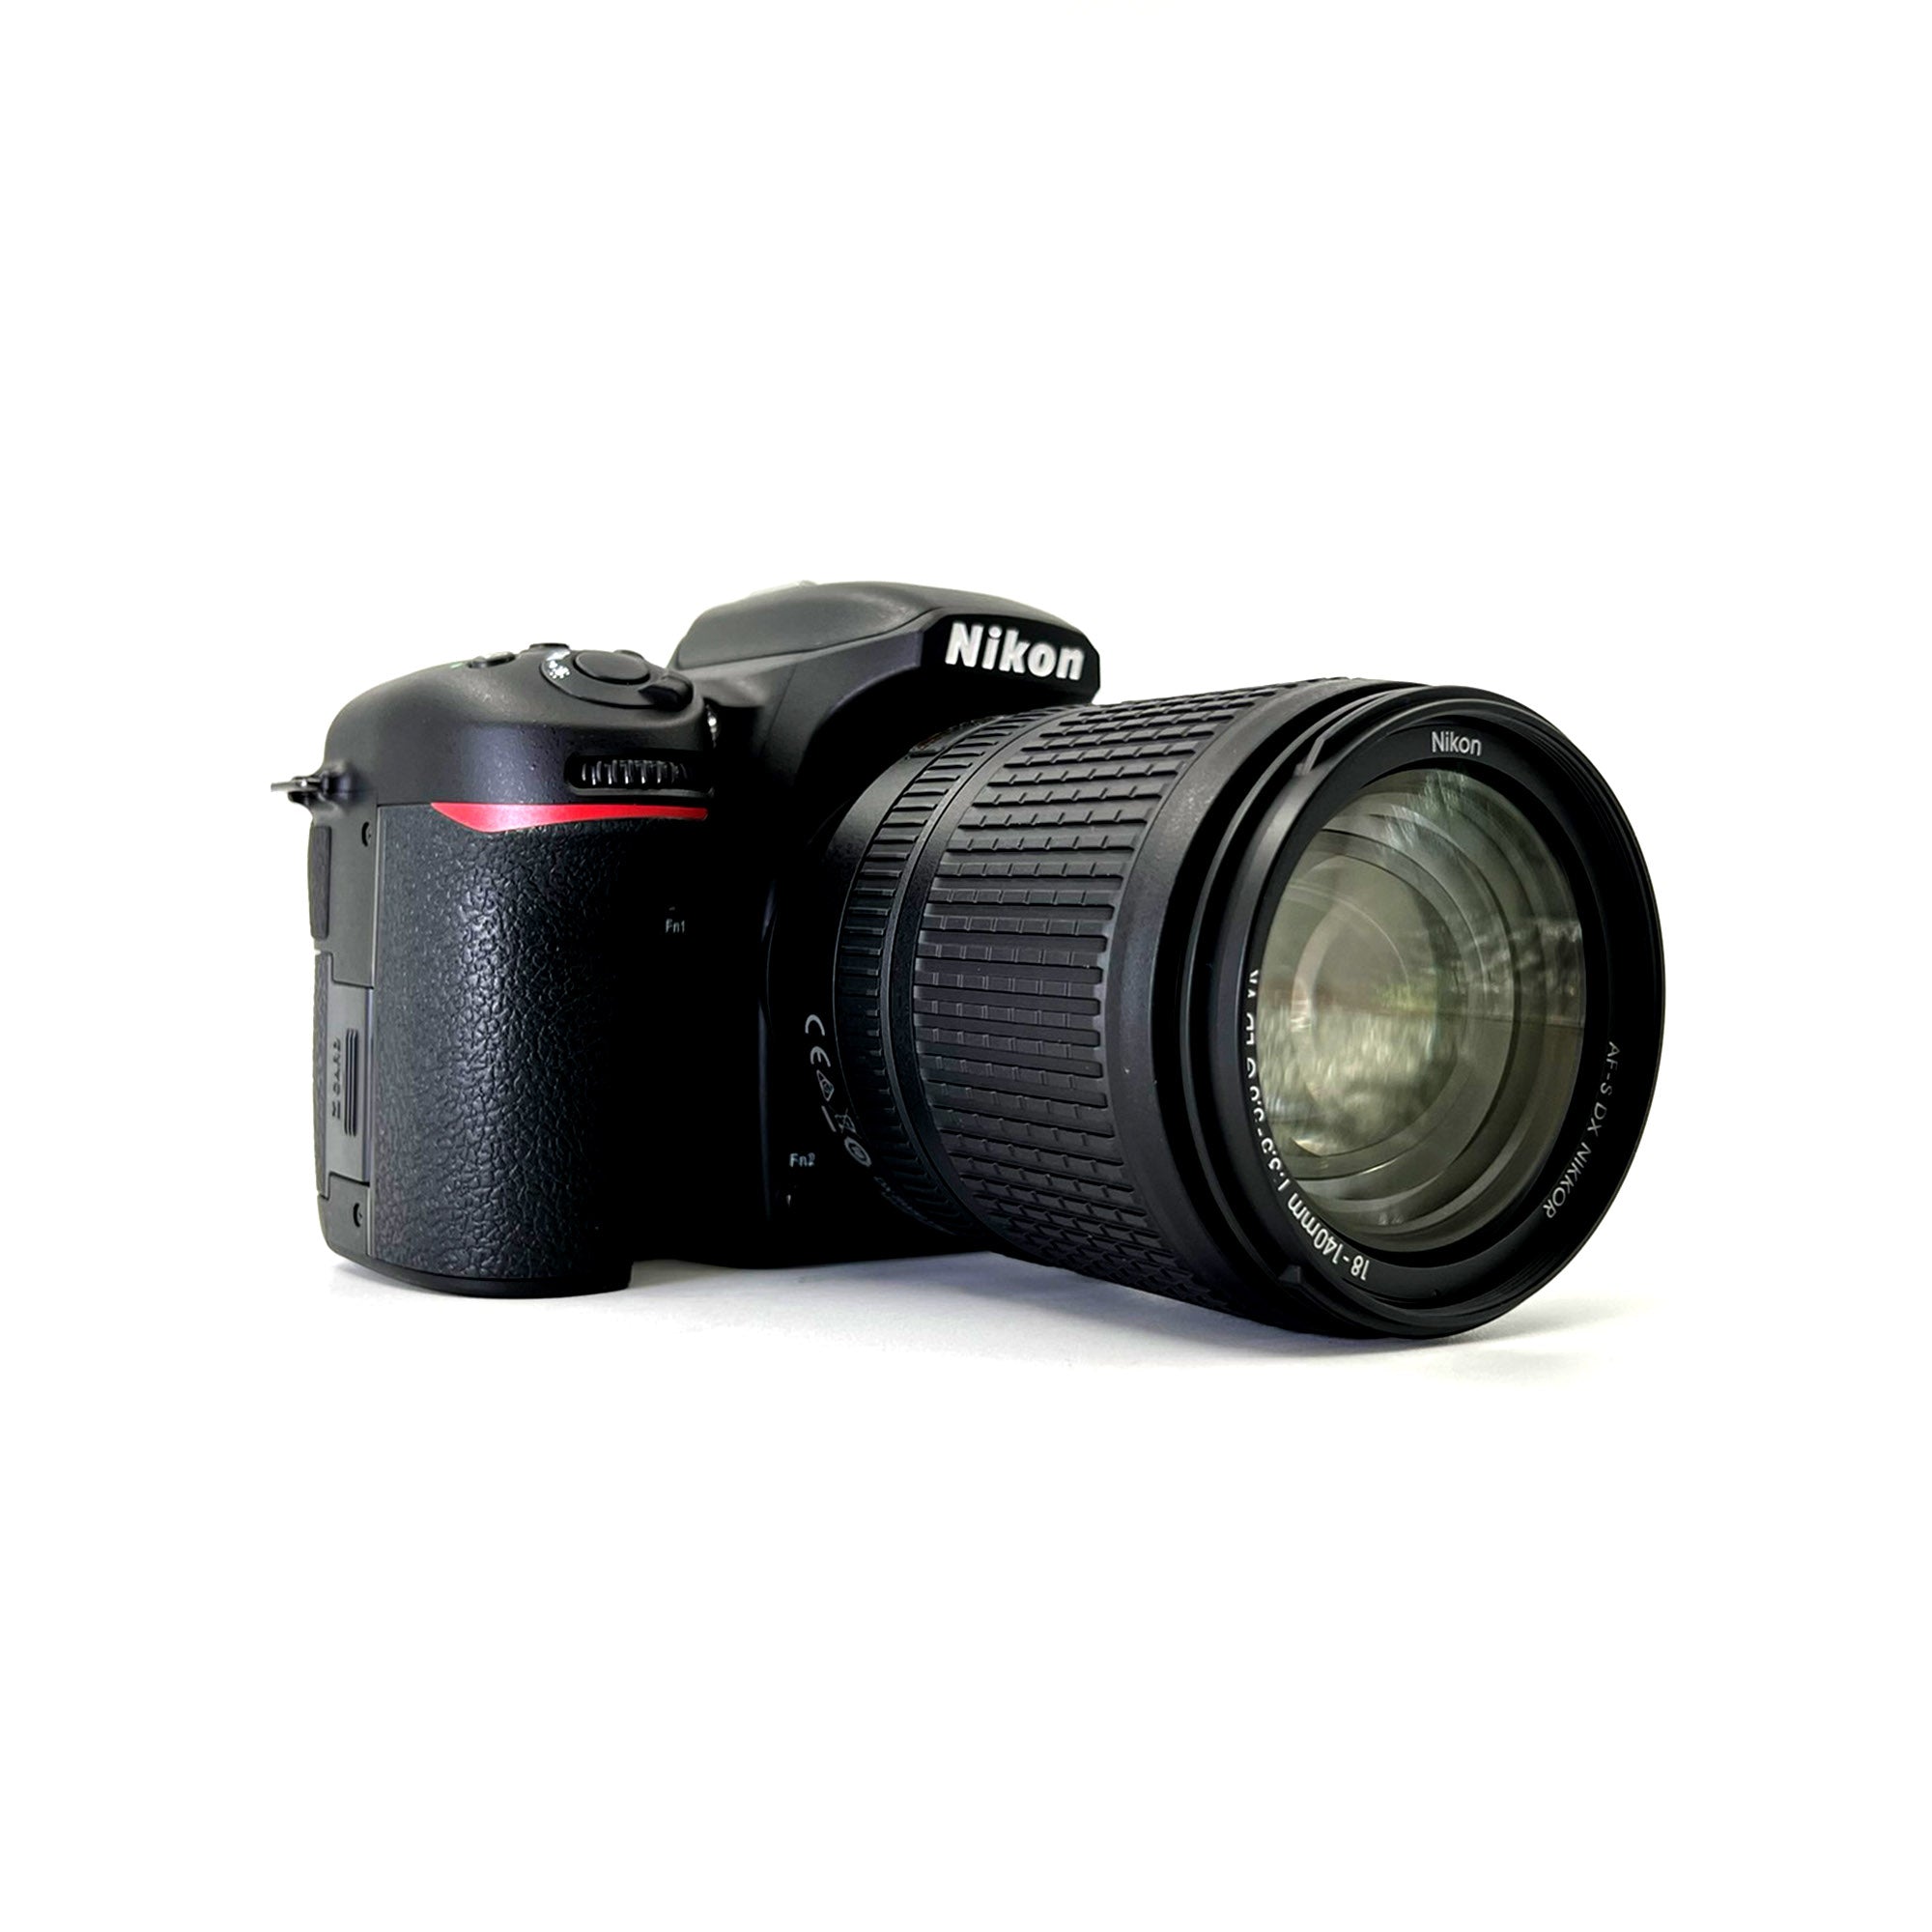  Nikon D7500 Digital DSLR Camera Body - Black : Electronics